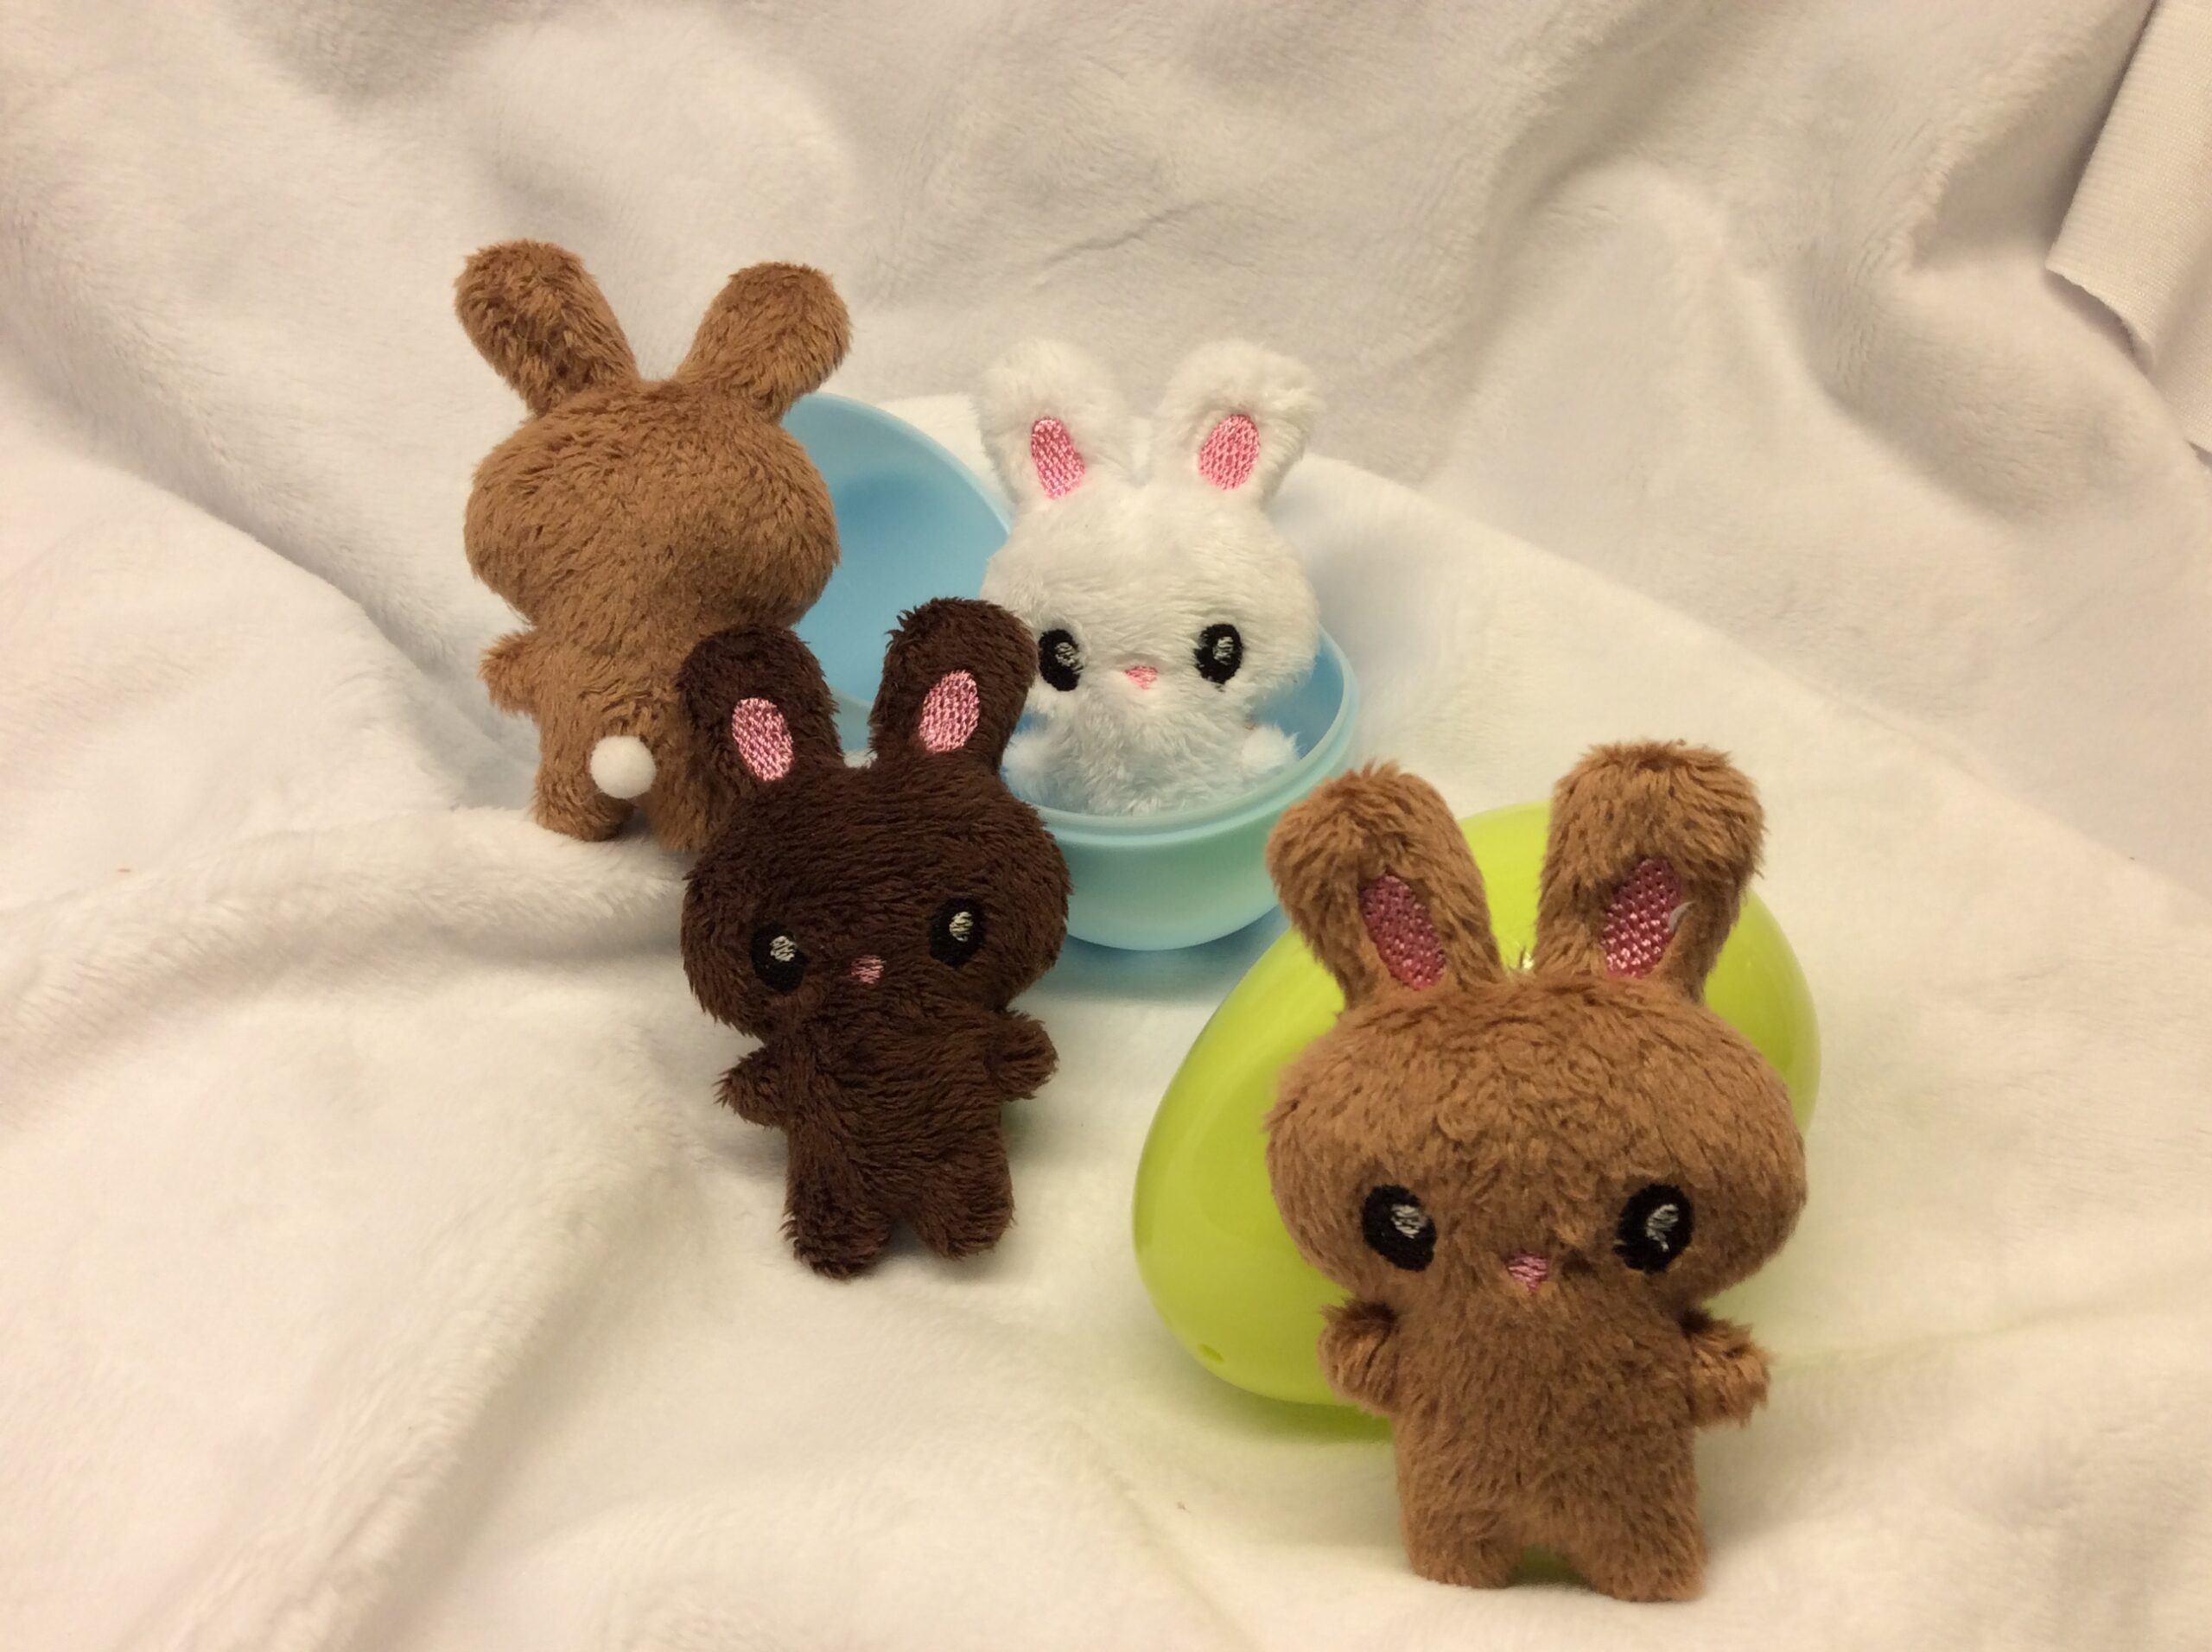 Chocolate bunnies!